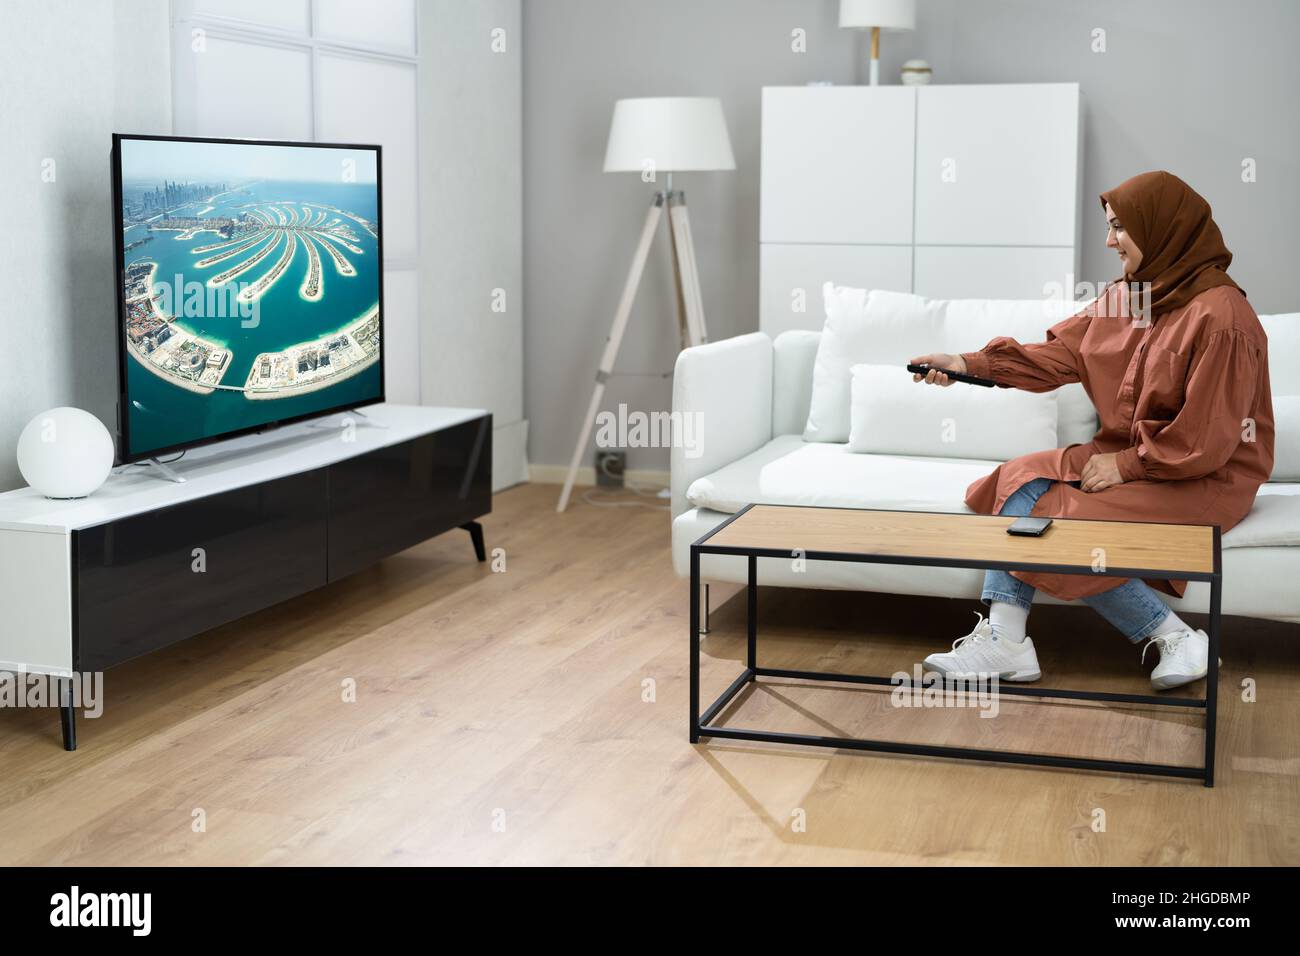 Muslim Woman Watching TV Movie At House Room Stock Photo